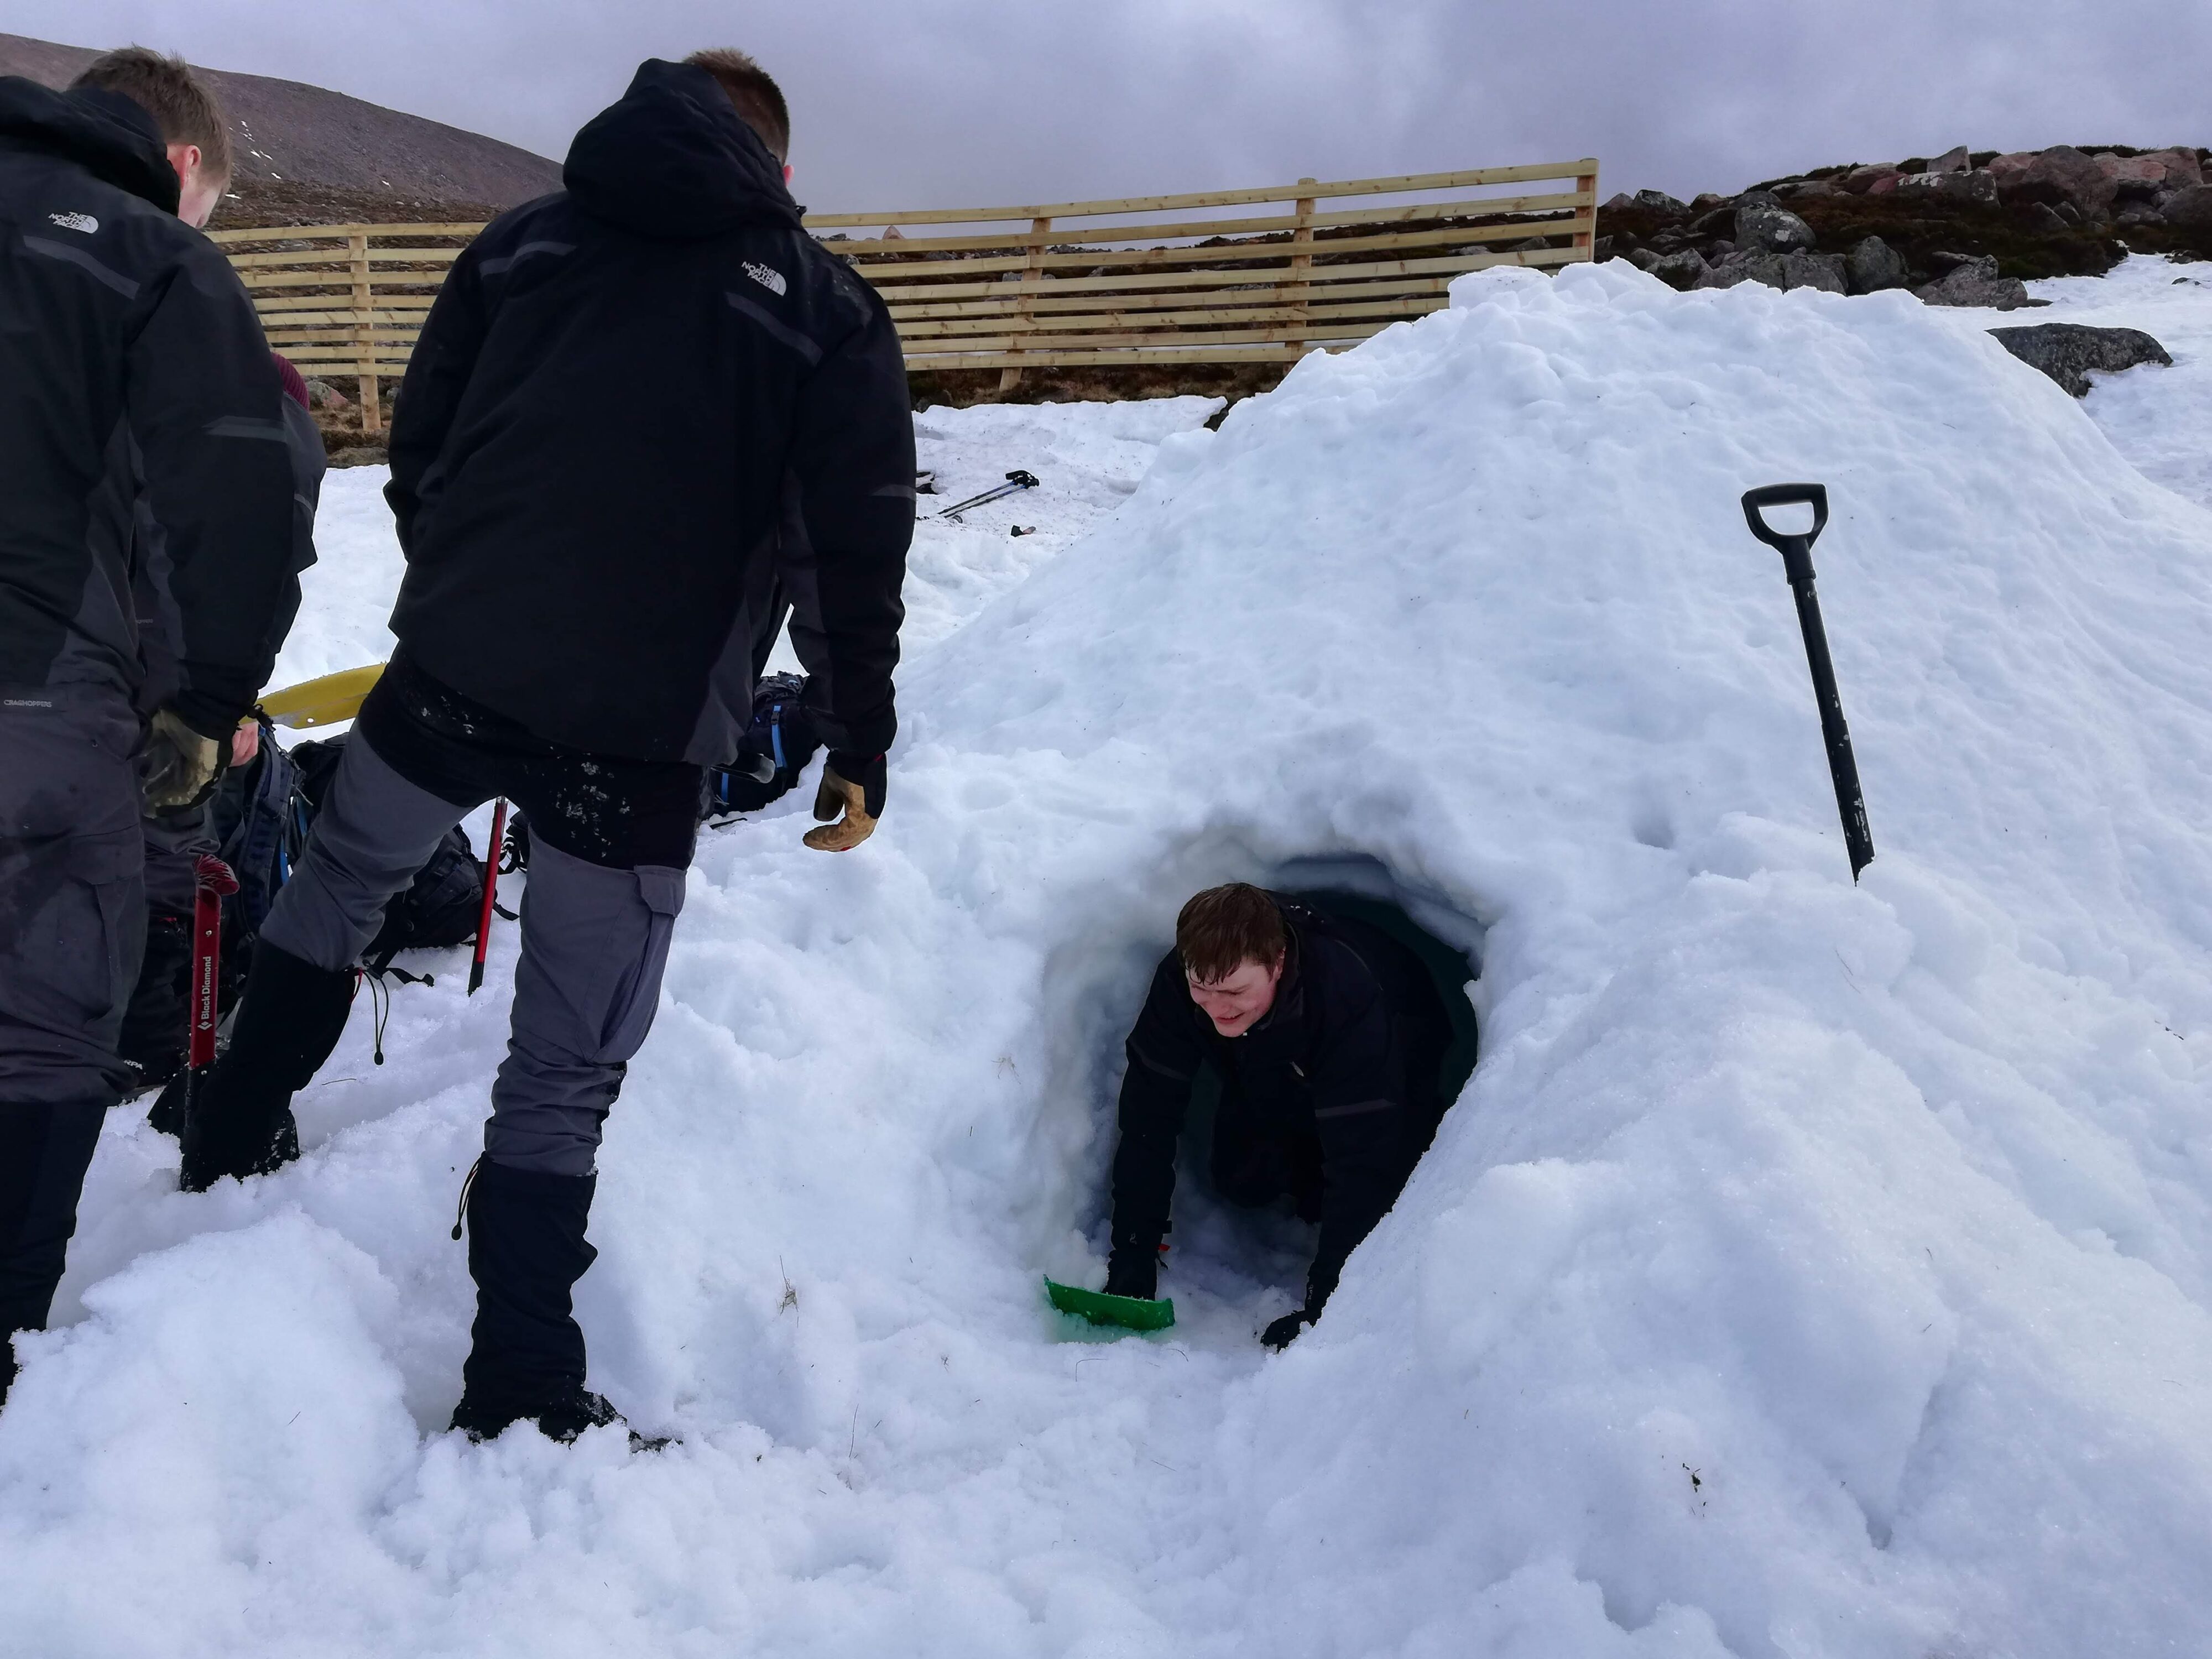 Winter Mountaineering emergency shelters shovel up